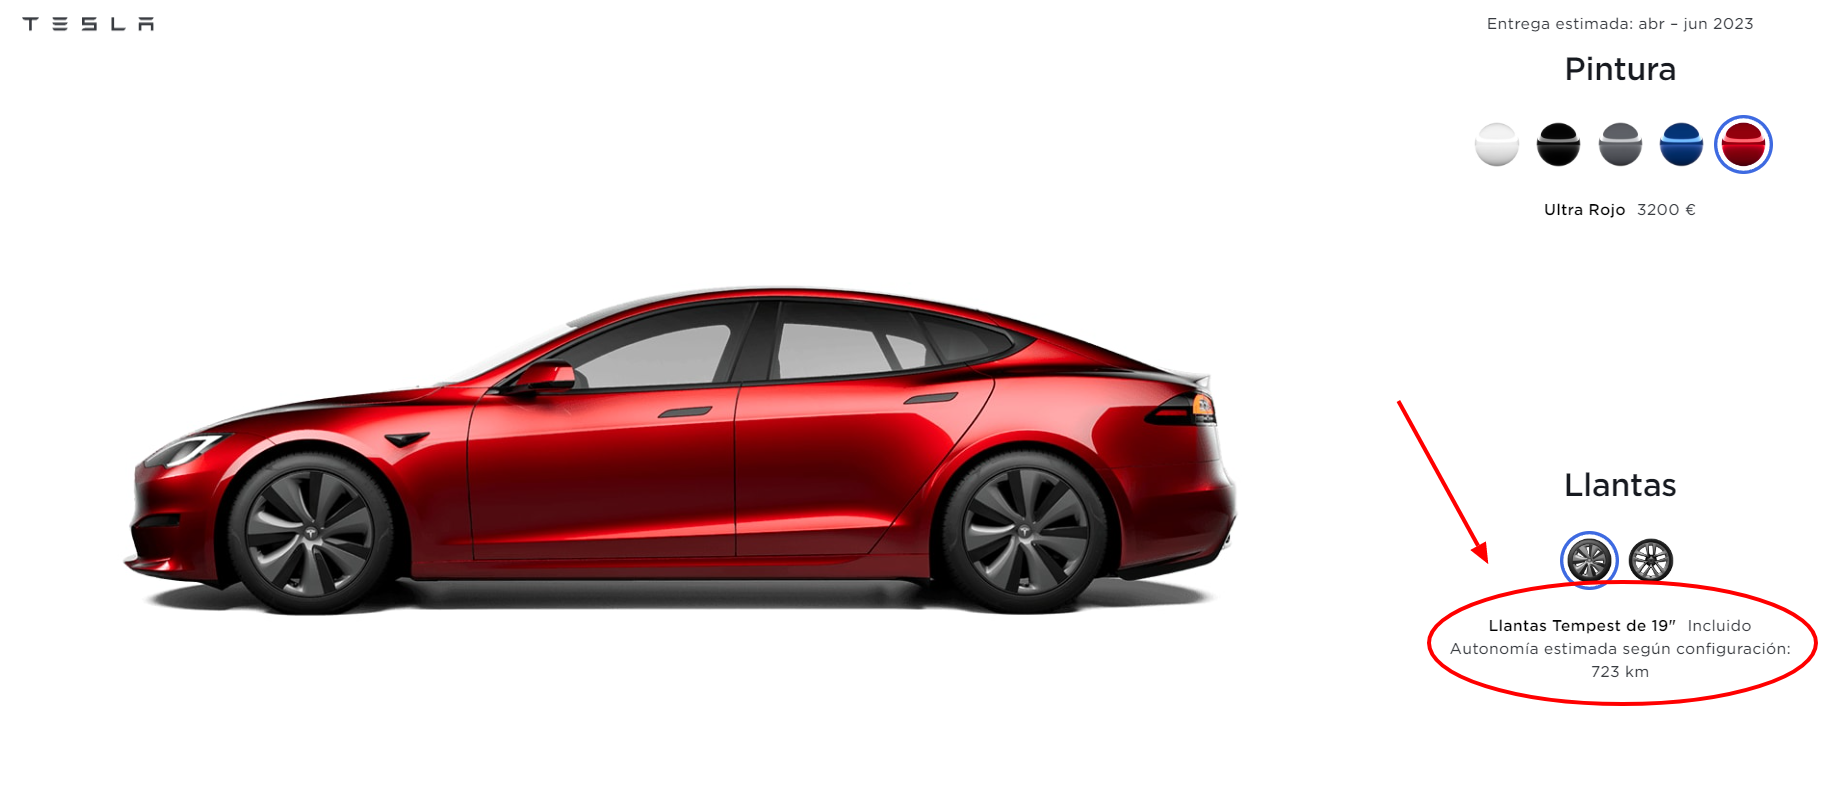 Tesla Model S autonomia